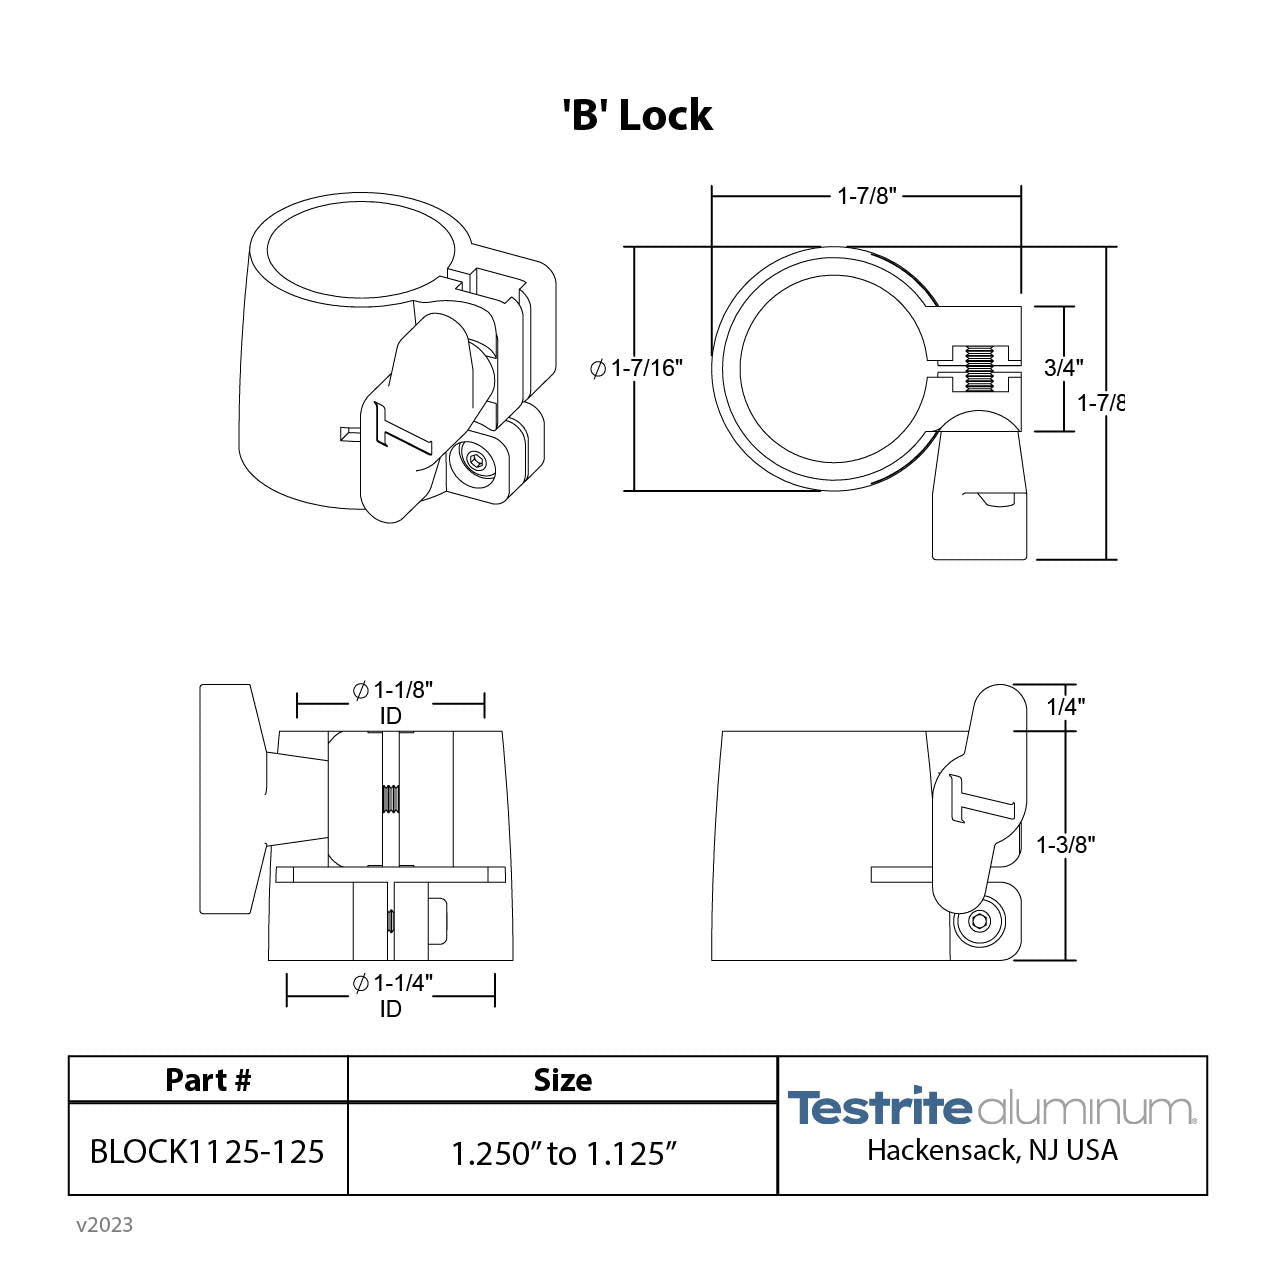 Spec Card B Split Collar Lock 1-1/8" to 1-1/4", 1.125" to 1.25" Telescopic tubing clamp